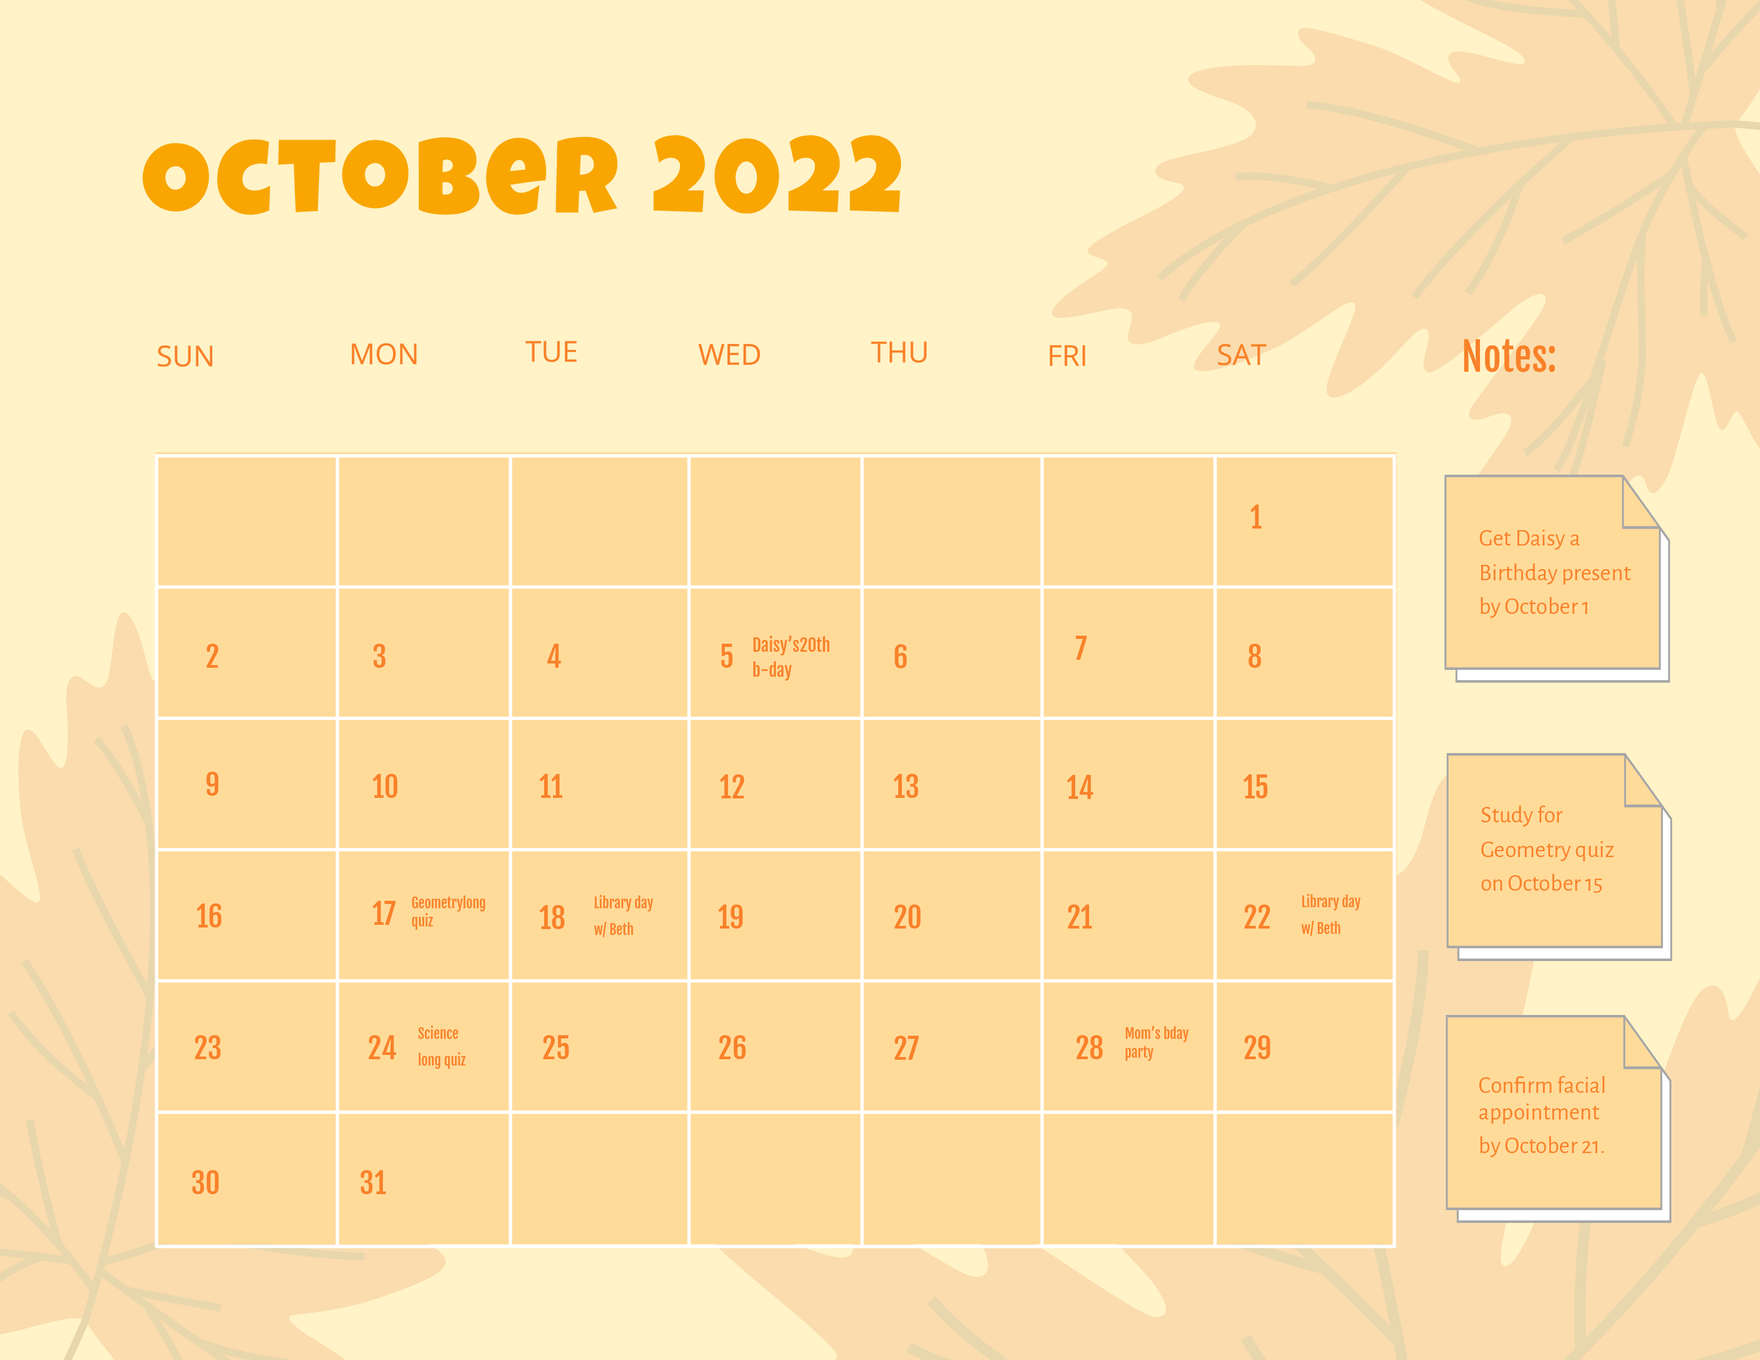 October 2022 Monthly Calendar Template